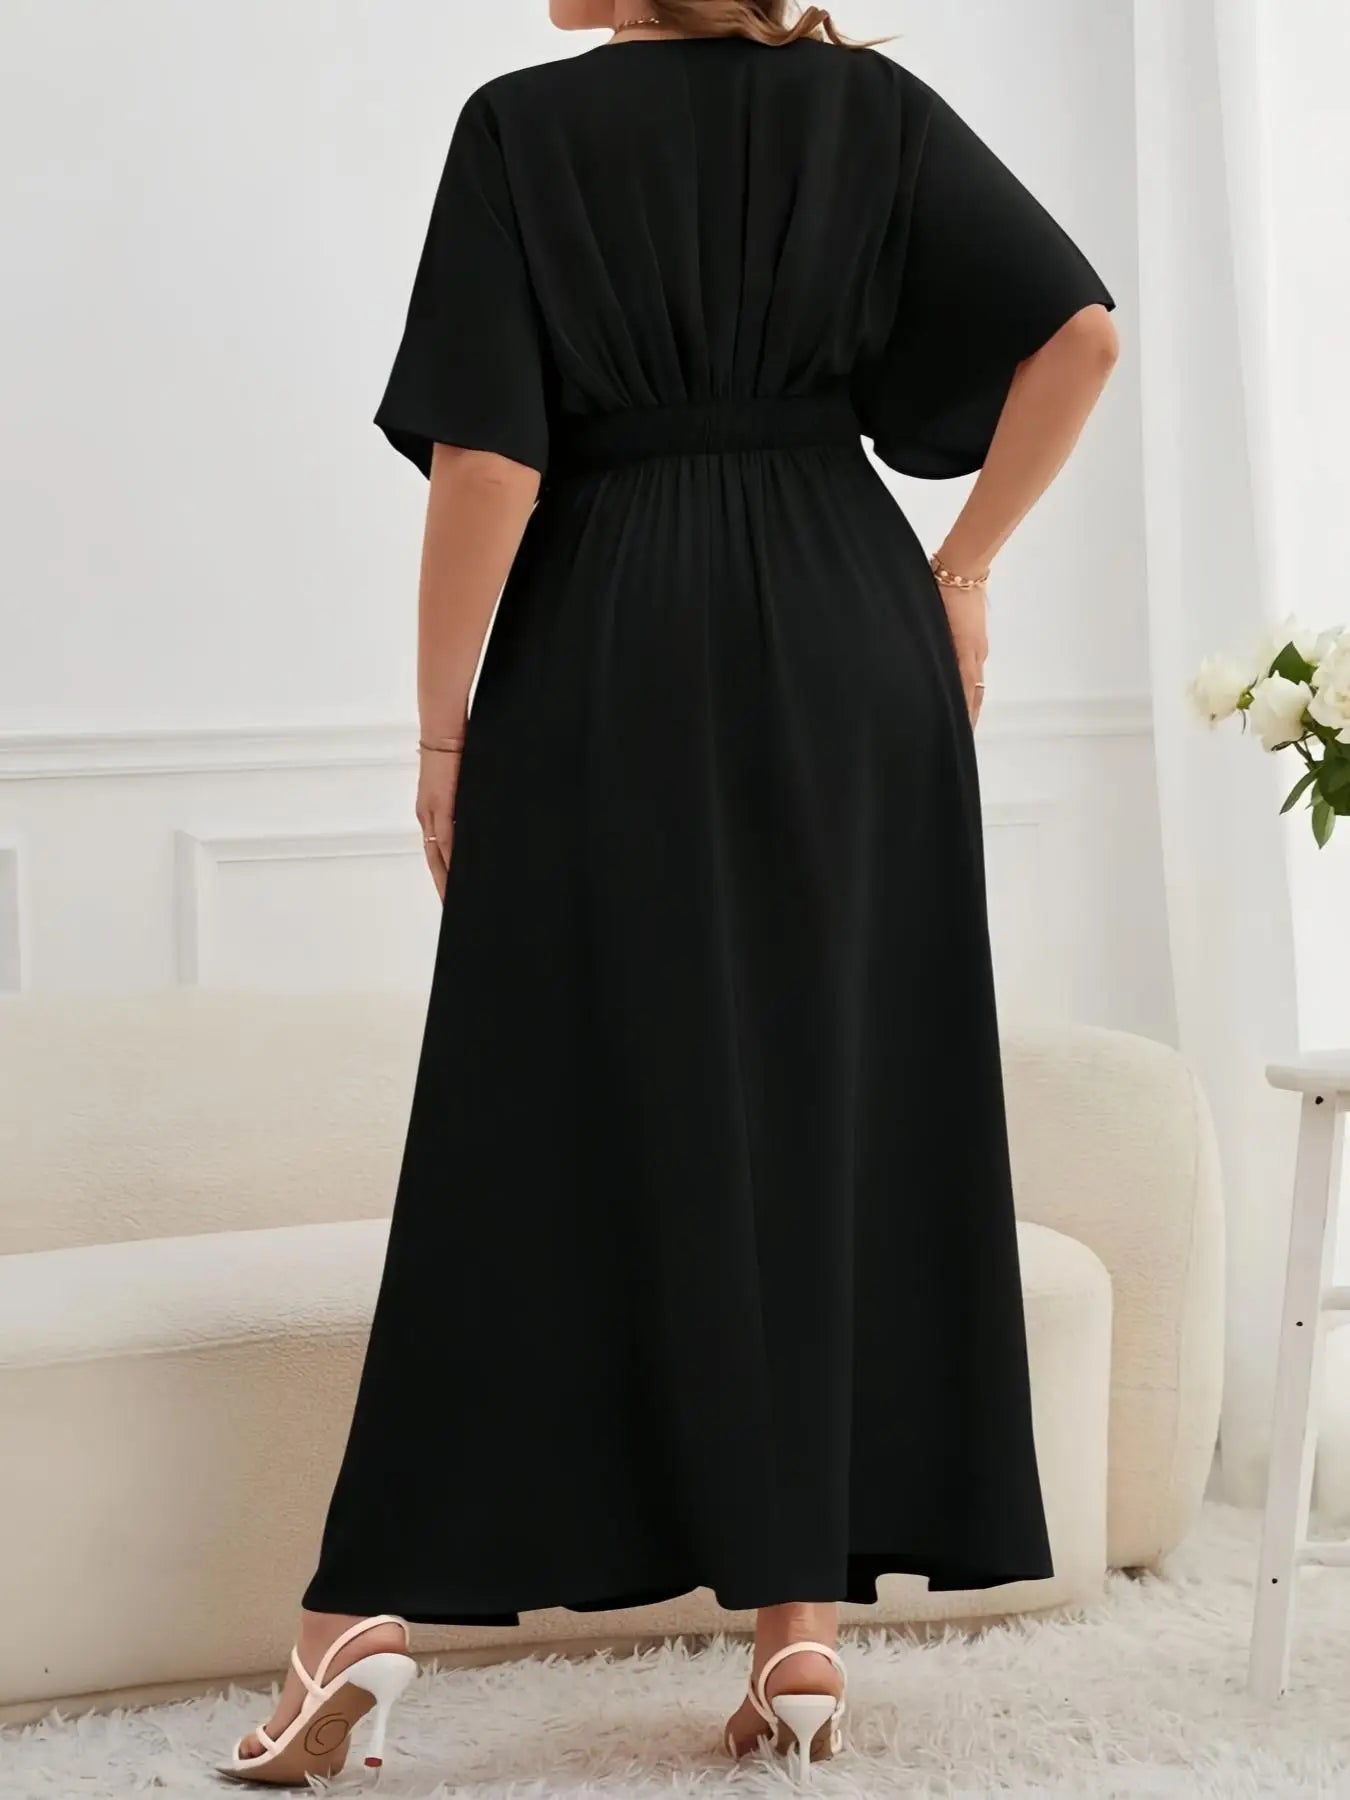 Elegant Oversize Maxi Dress Women Short Sleeve V-neck A-line Clothes Summer Plus Size Loose Lady Black Casual Dresses